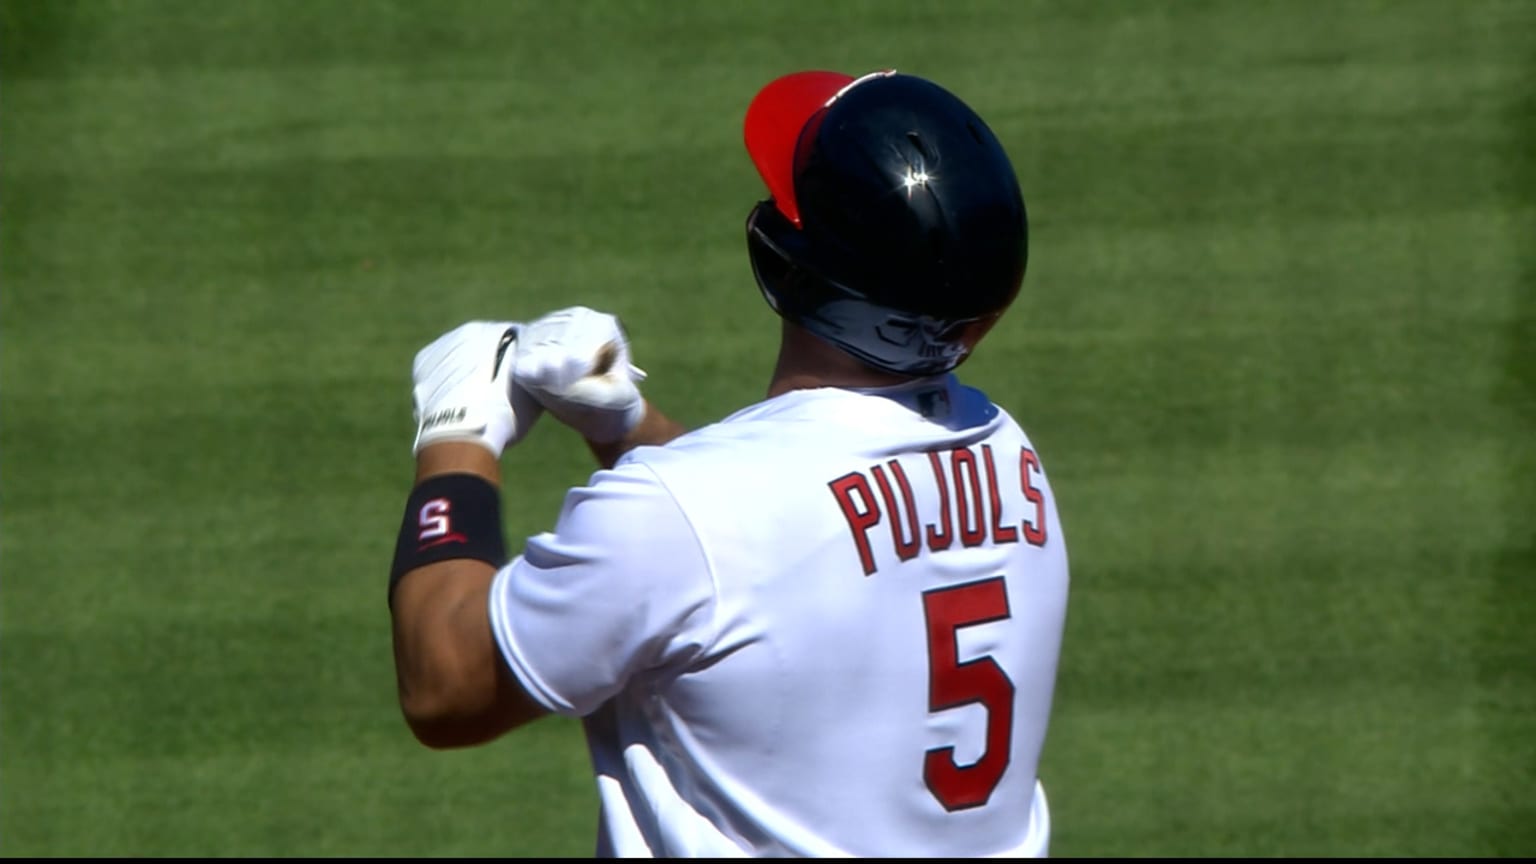 Albert Pujols' batting stance over the years : r/baseball